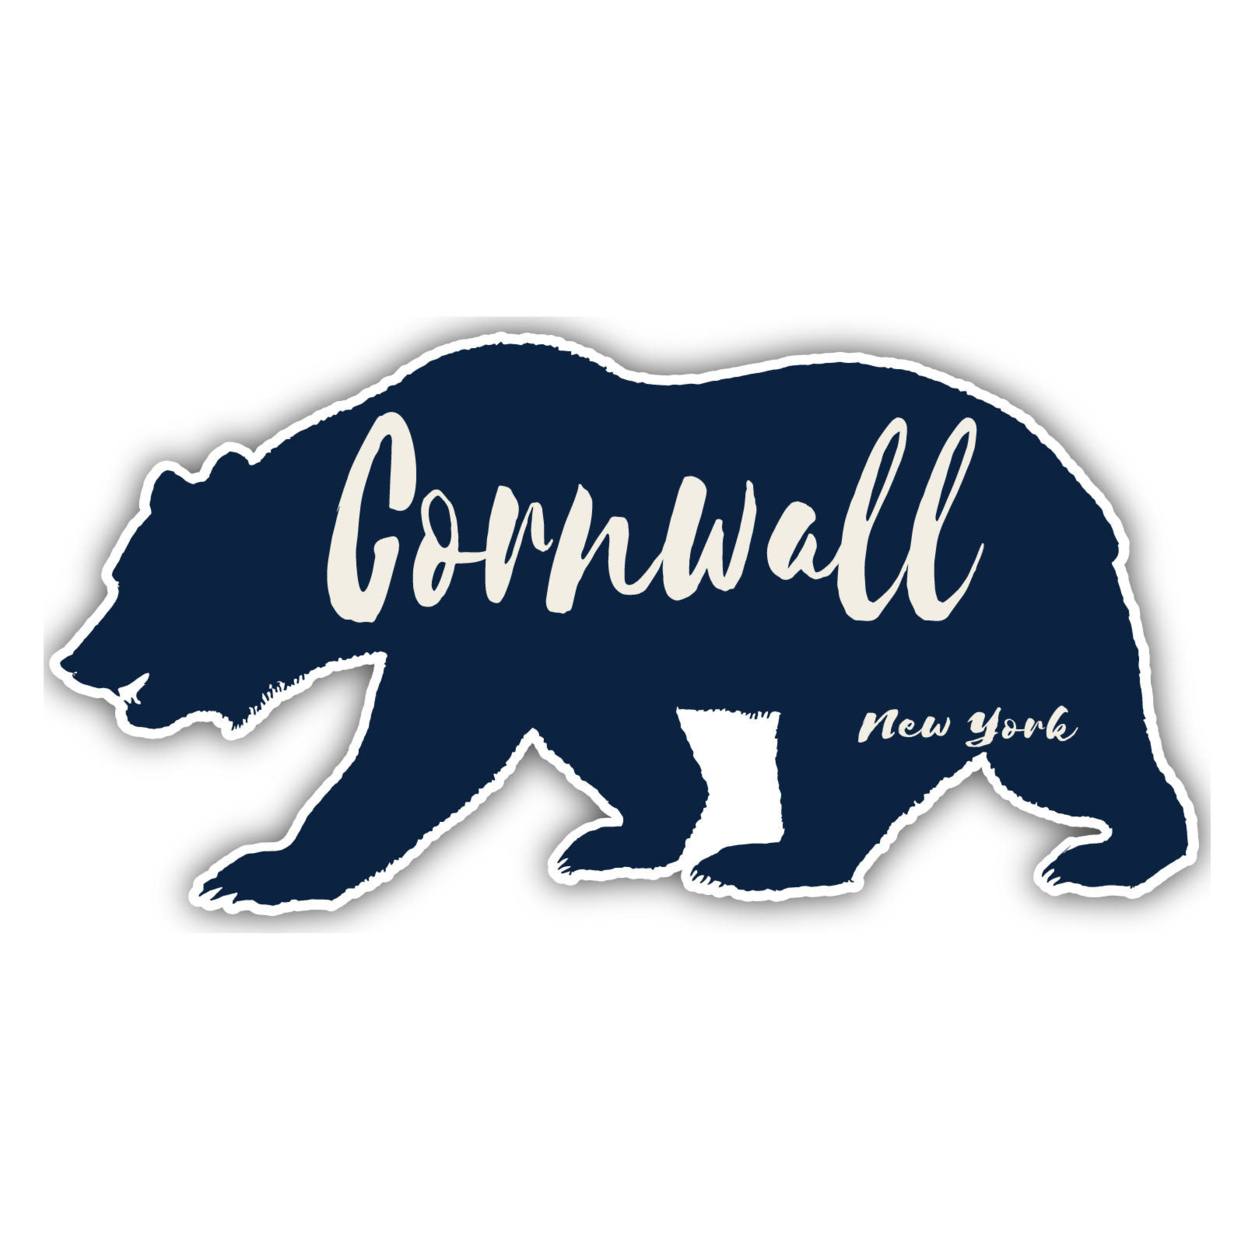 Cornwall New York Souvenir Decorative Stickers (Choose Theme And Size) - Single Unit, 2-Inch, Bear